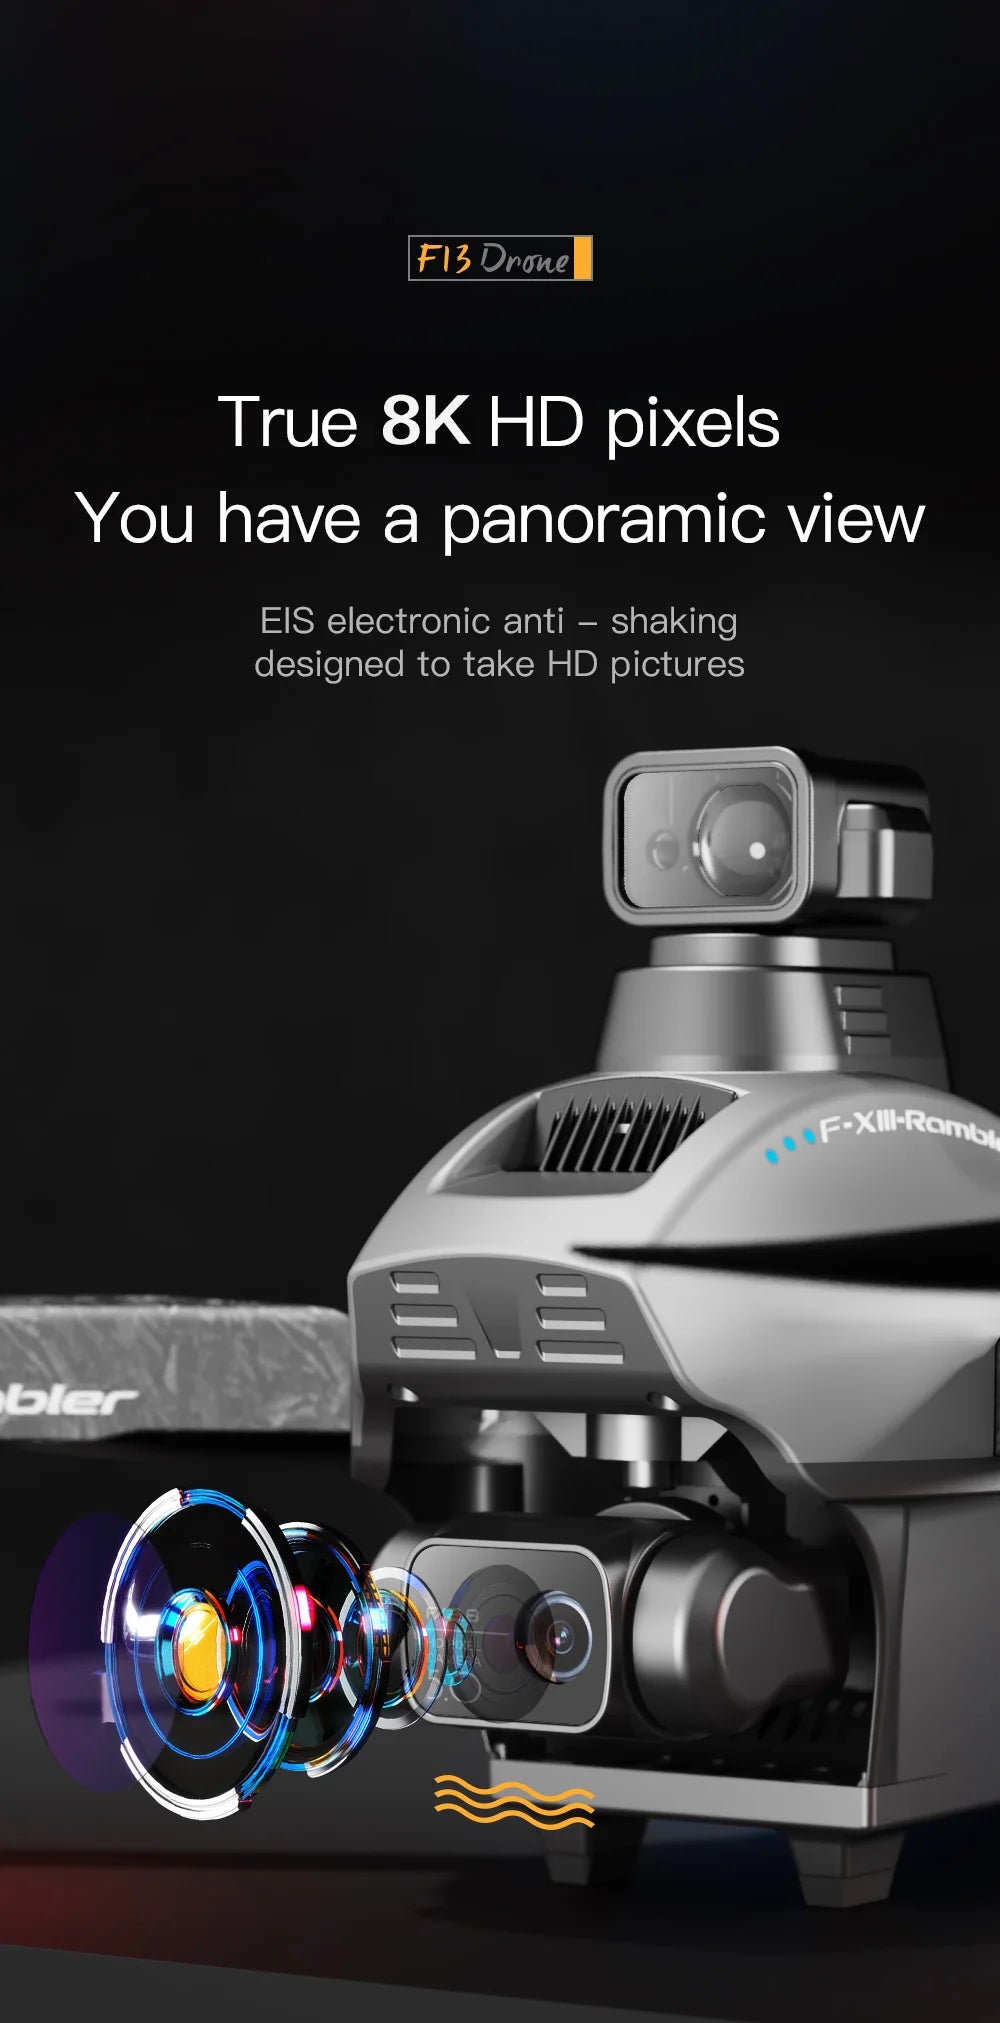 F13 Drone, EIS electronic anti shaking designed to take HD pictures F-Xil-Rambl